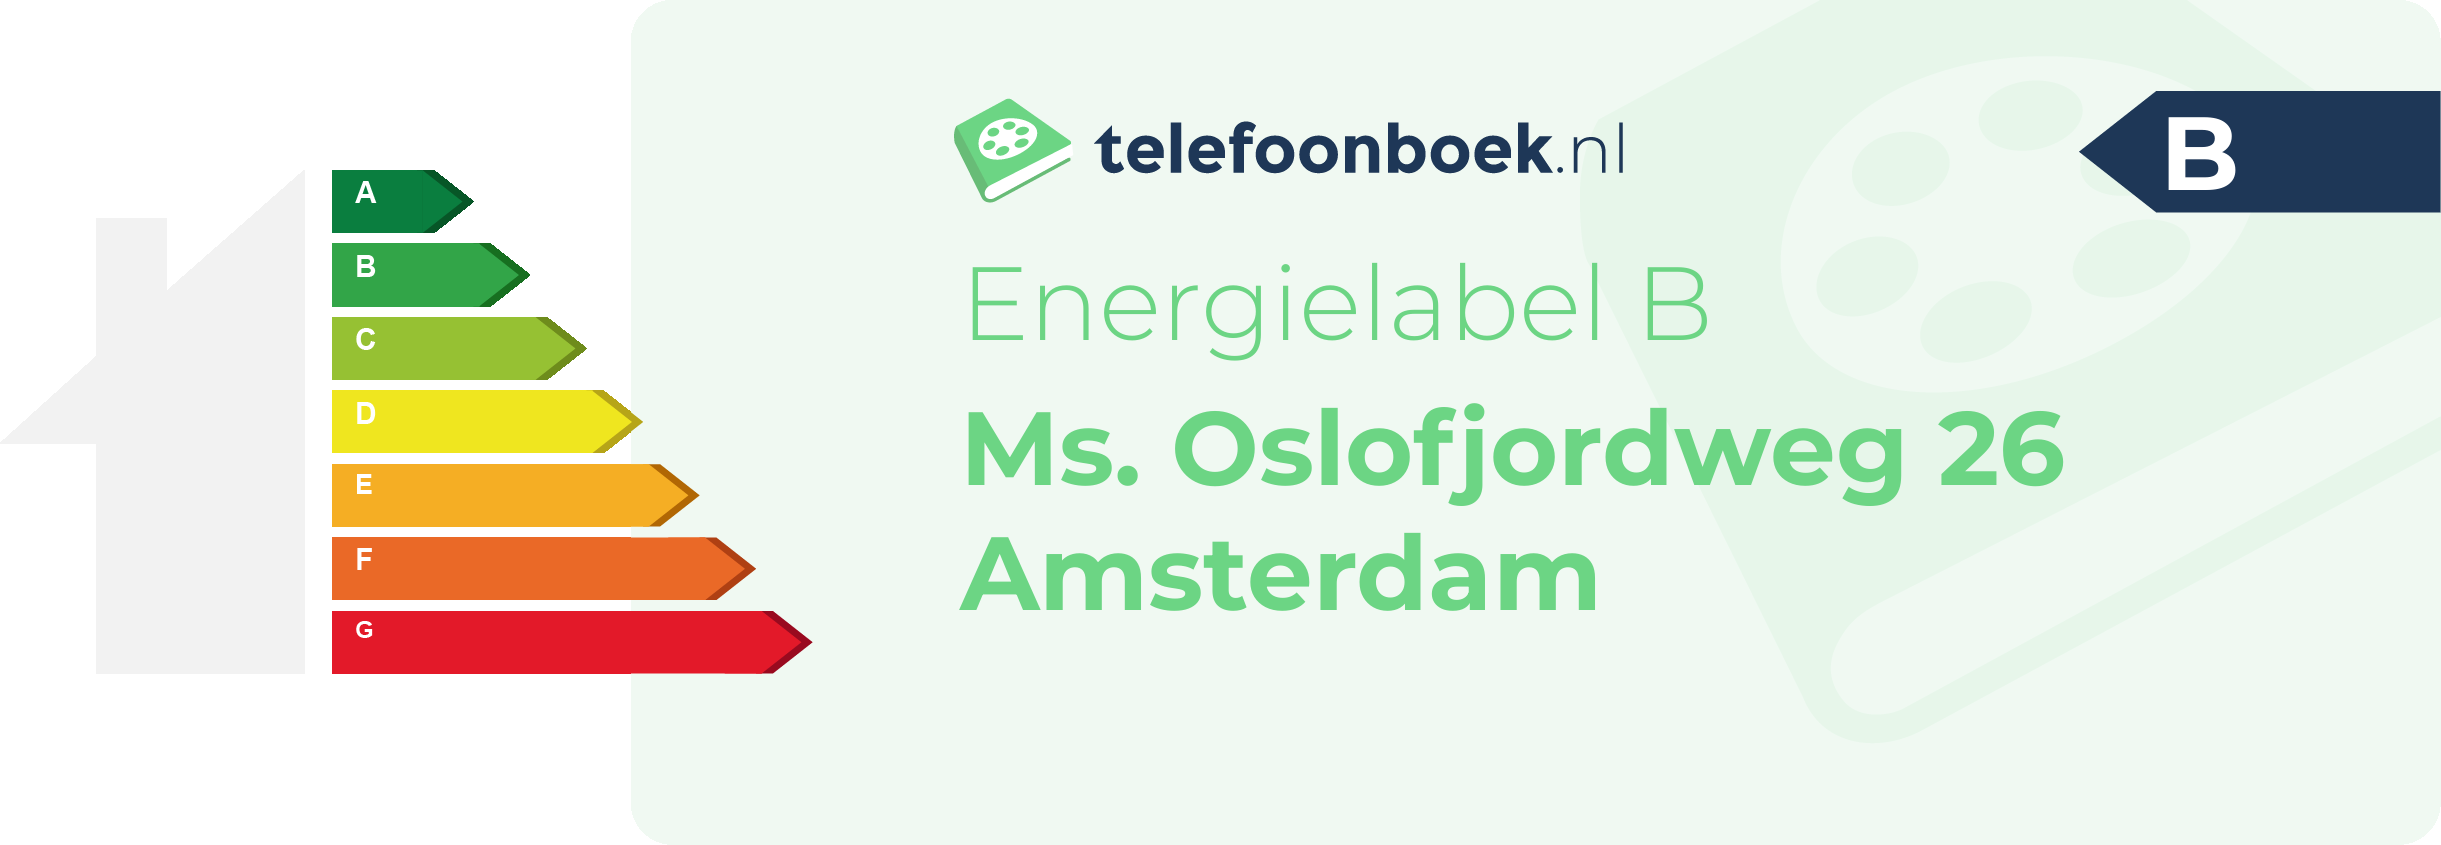 Energielabel Ms. Oslofjordweg 26 Amsterdam